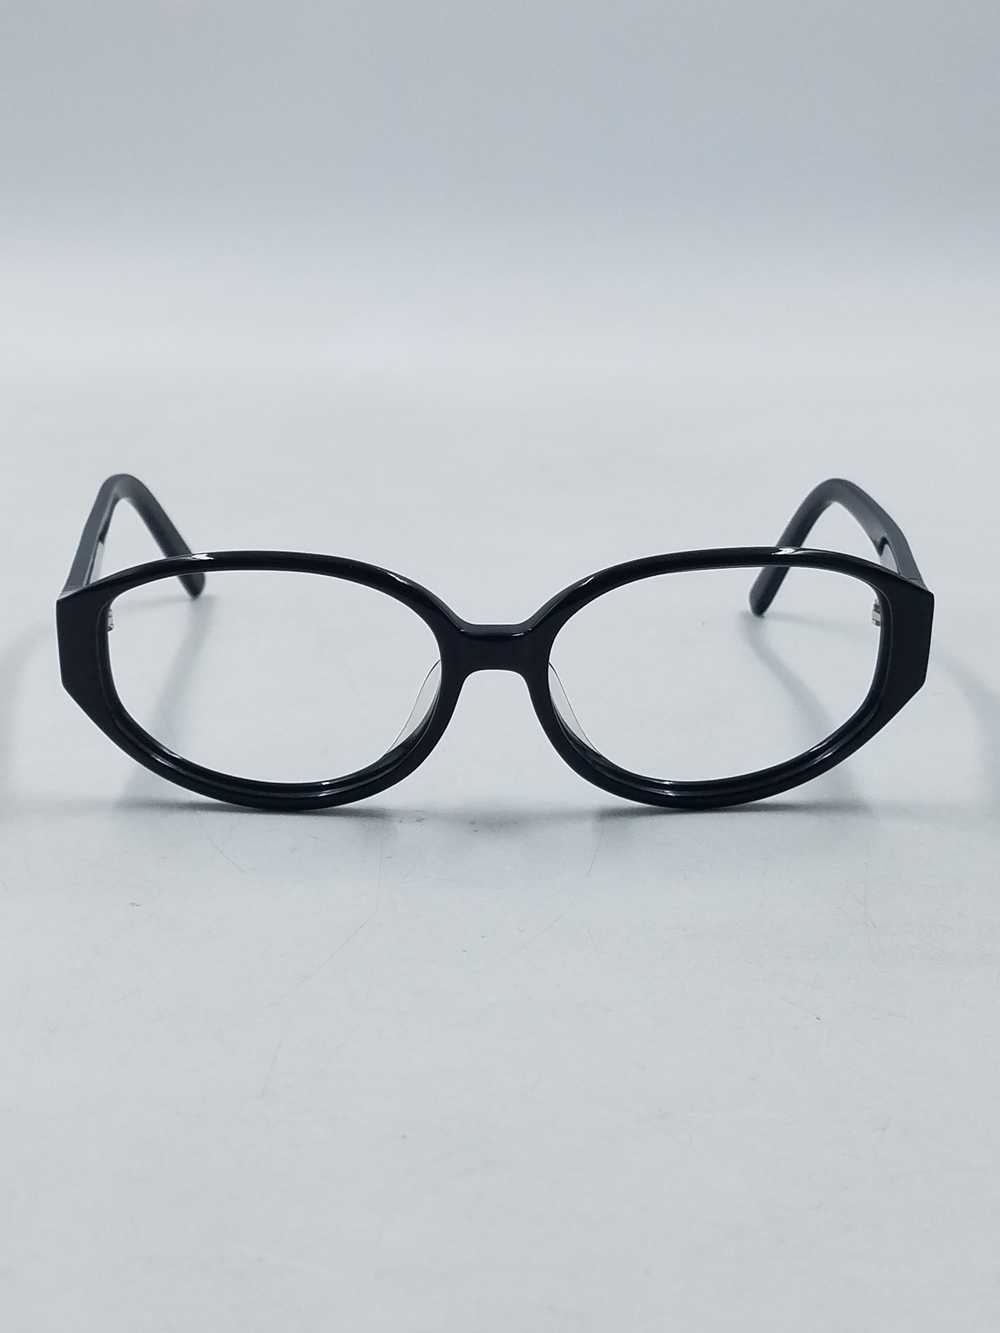 Salvatore Ferragamo Oval Black Eyeglasses - image 2